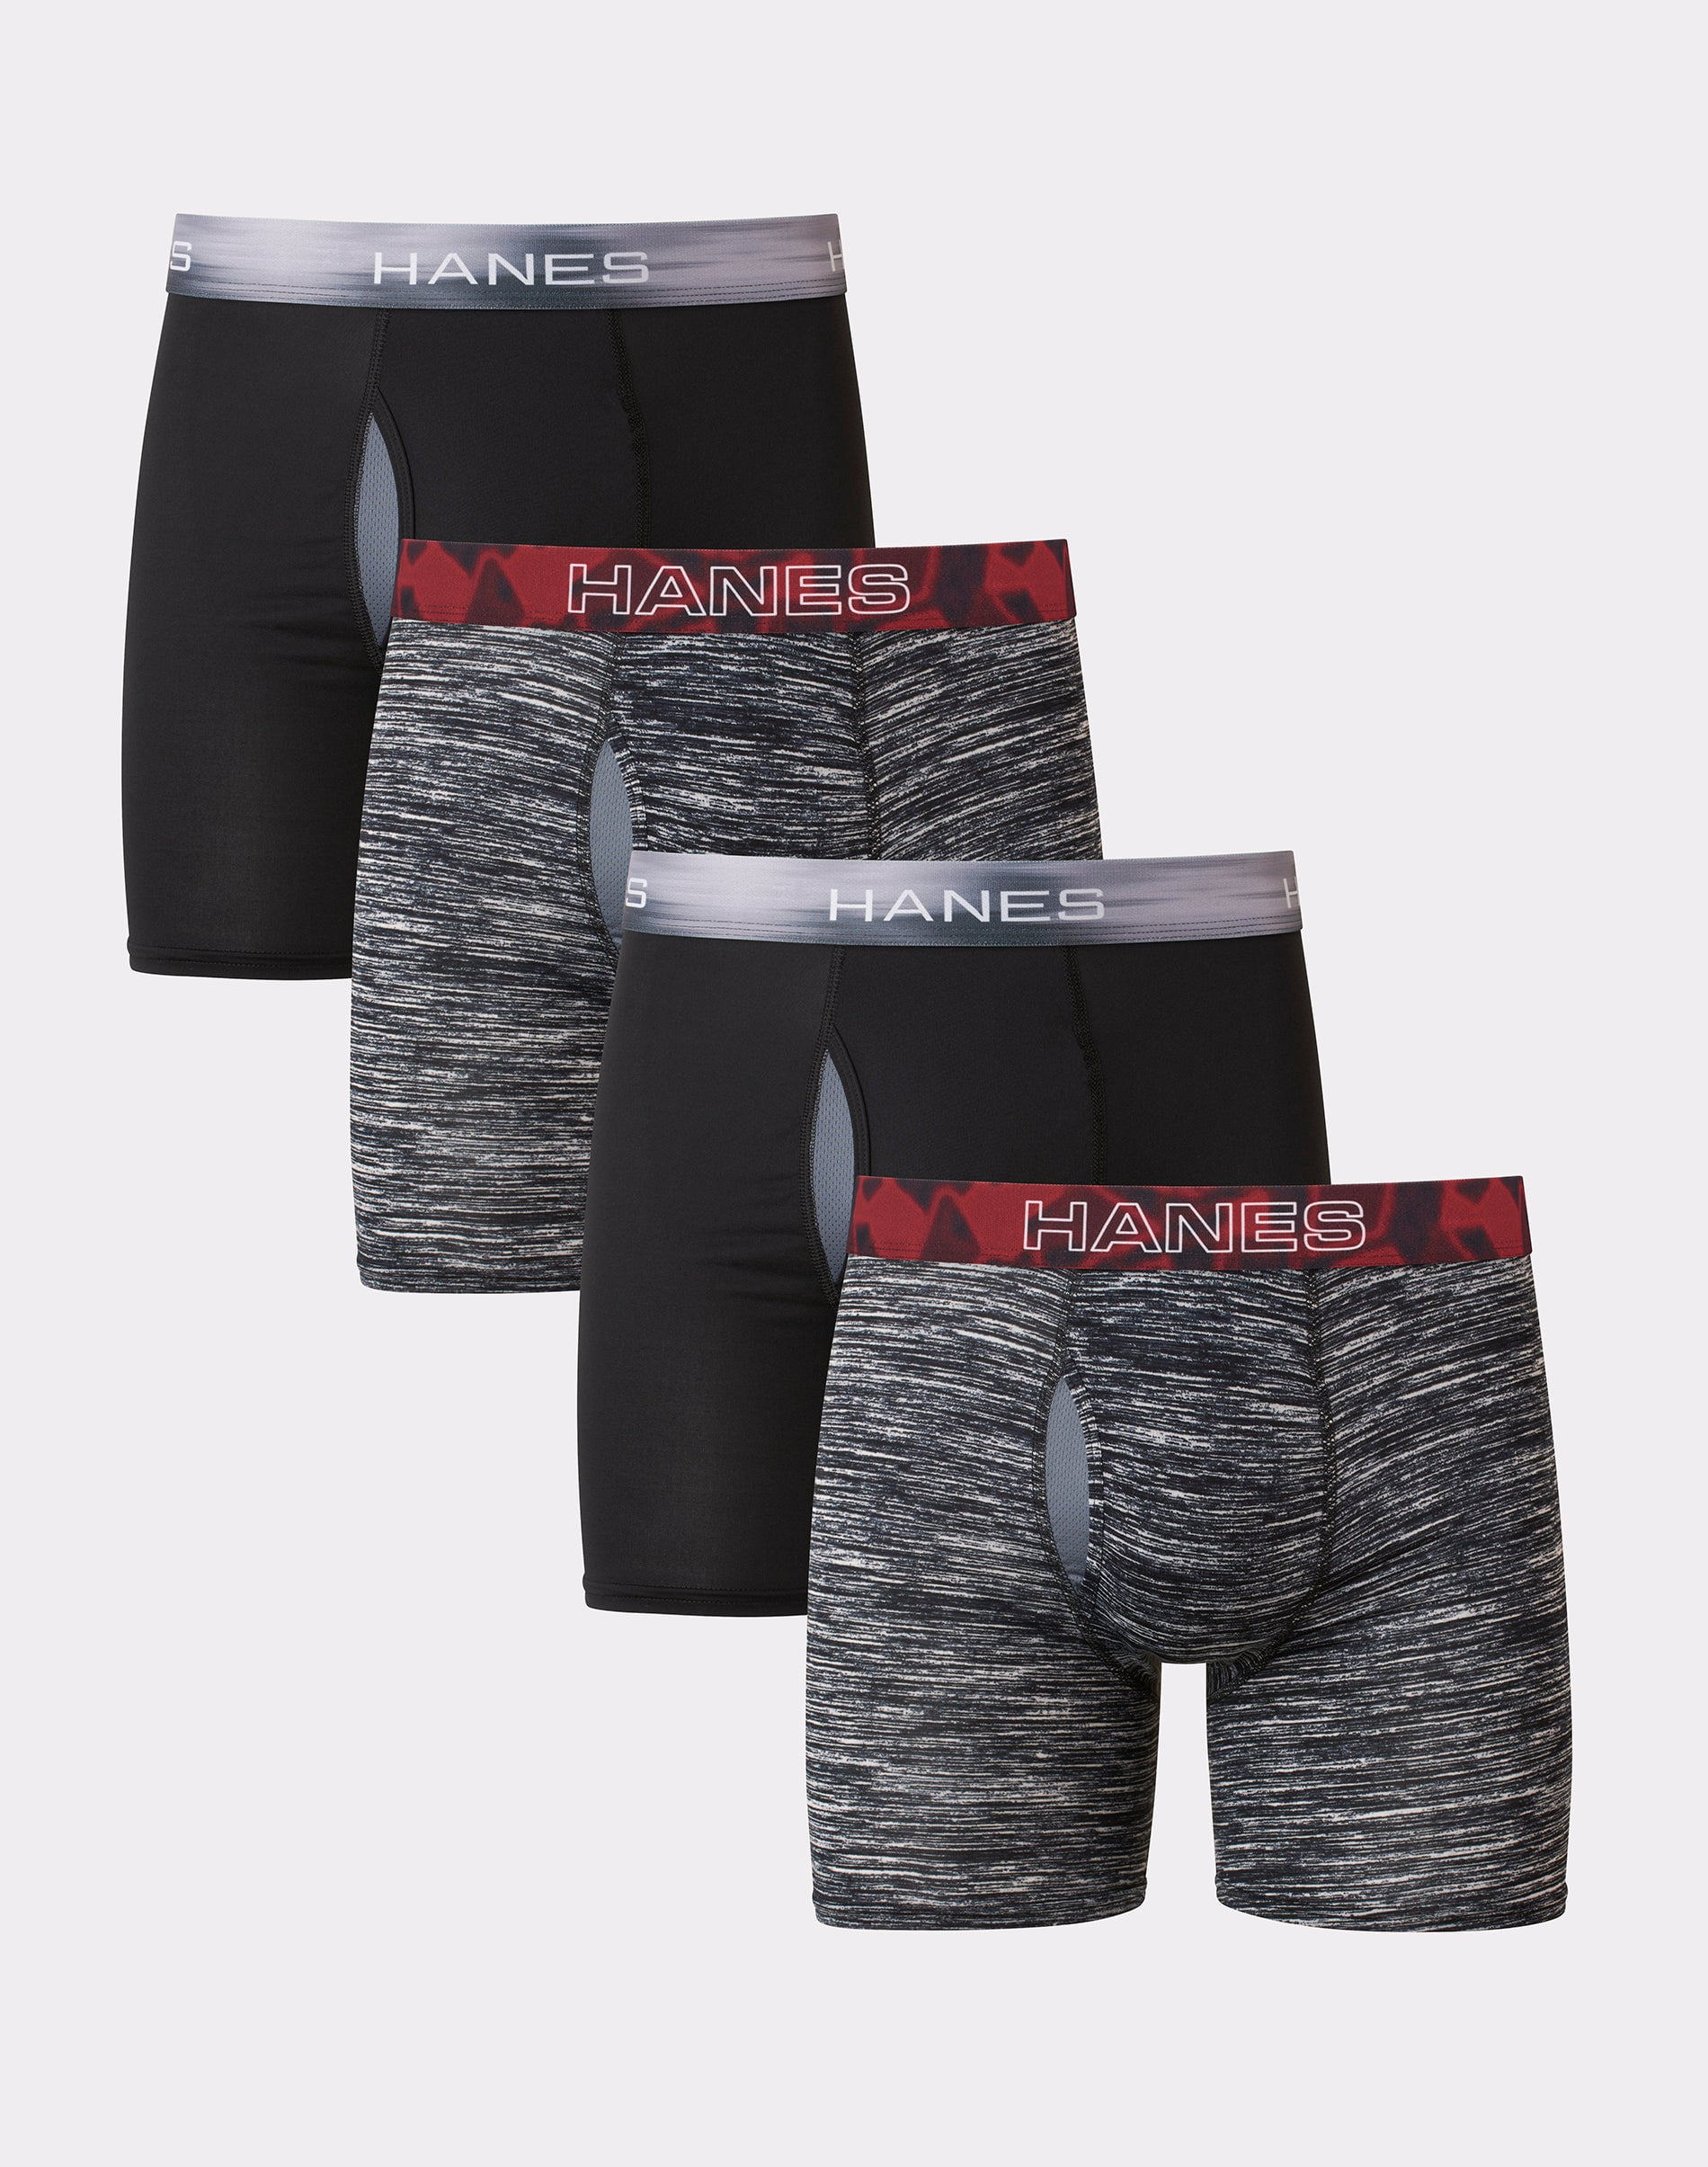 Hanes Ultimate Men's Performance Boxer Brief Underwear, X-Temp, Black/Grey,  4-Pack Assortment 2 2XL 